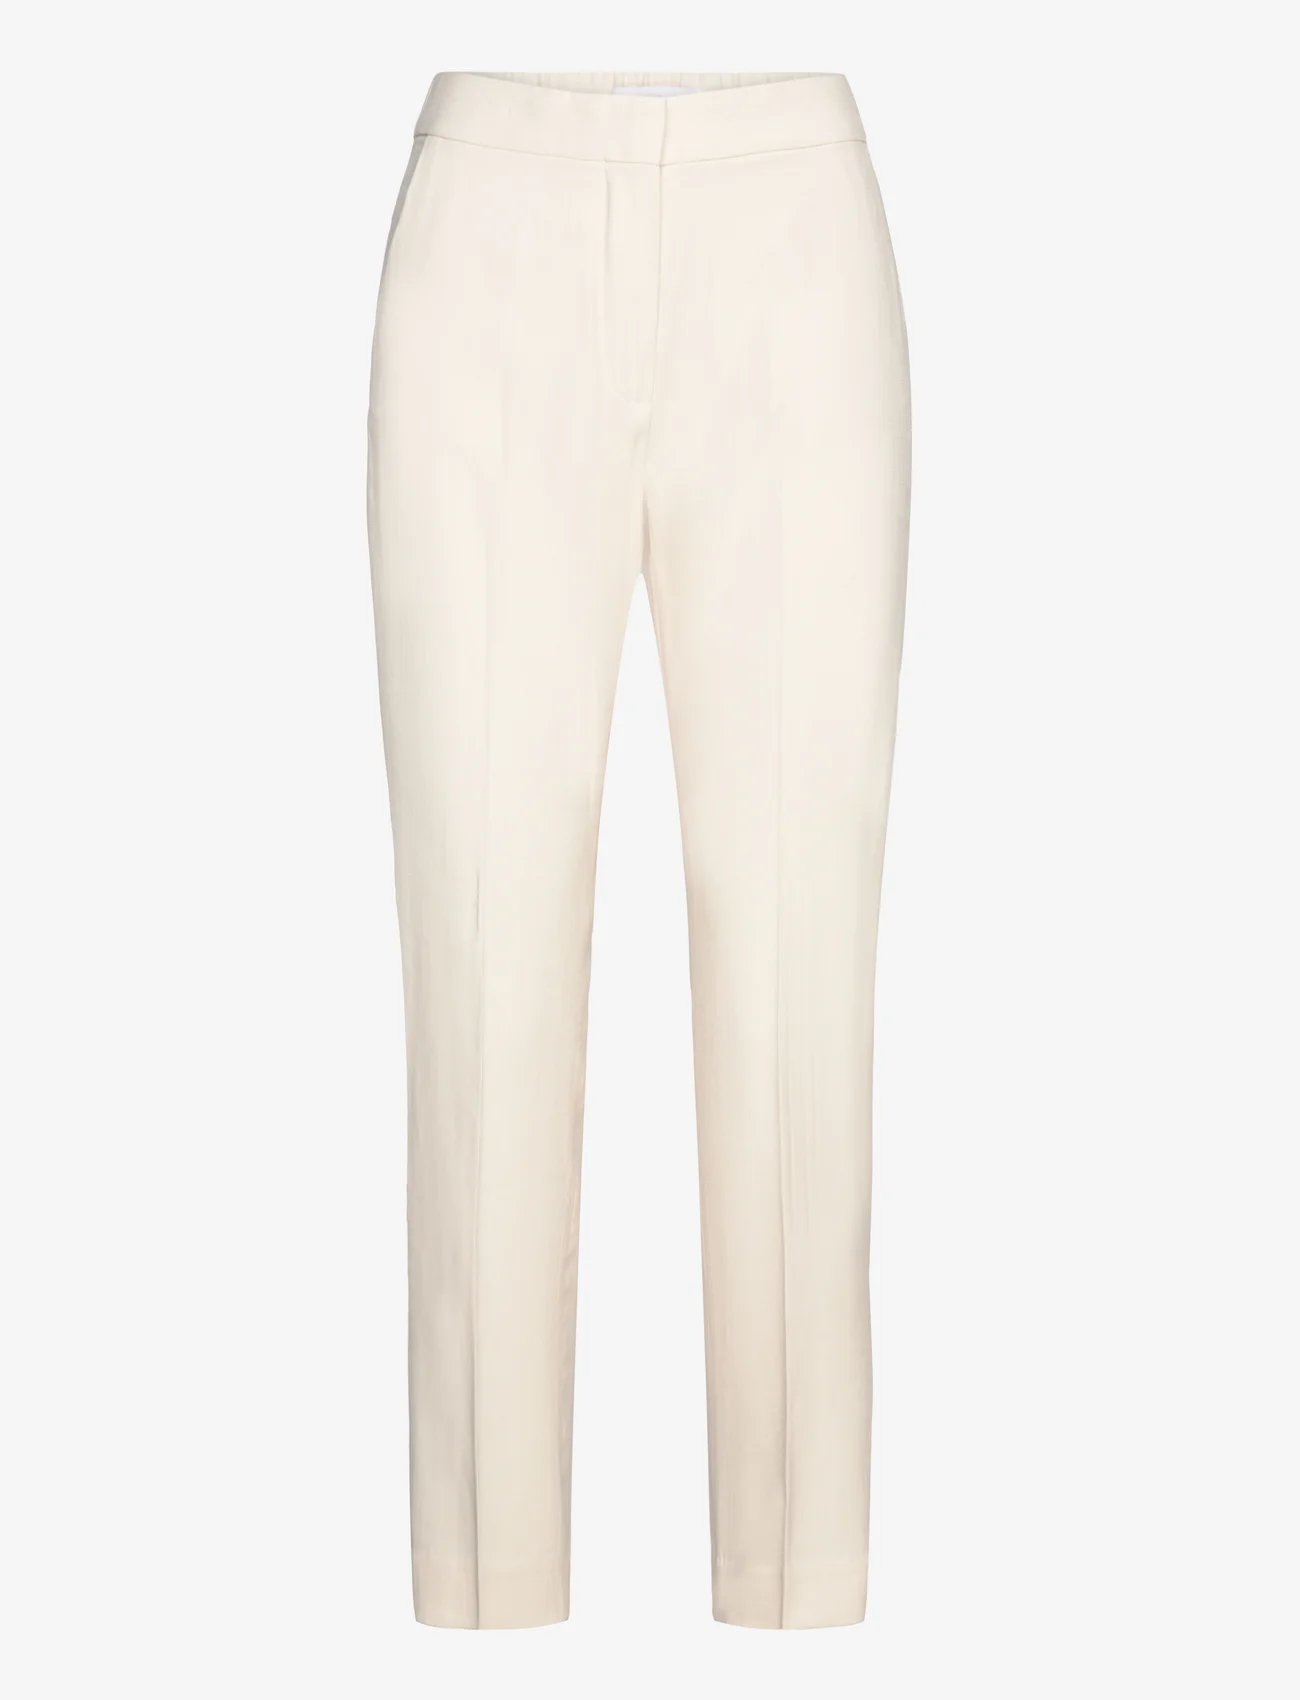 Mango - Straight suit trousers - juhlamuotia outlet-hintaan - light beige - 0